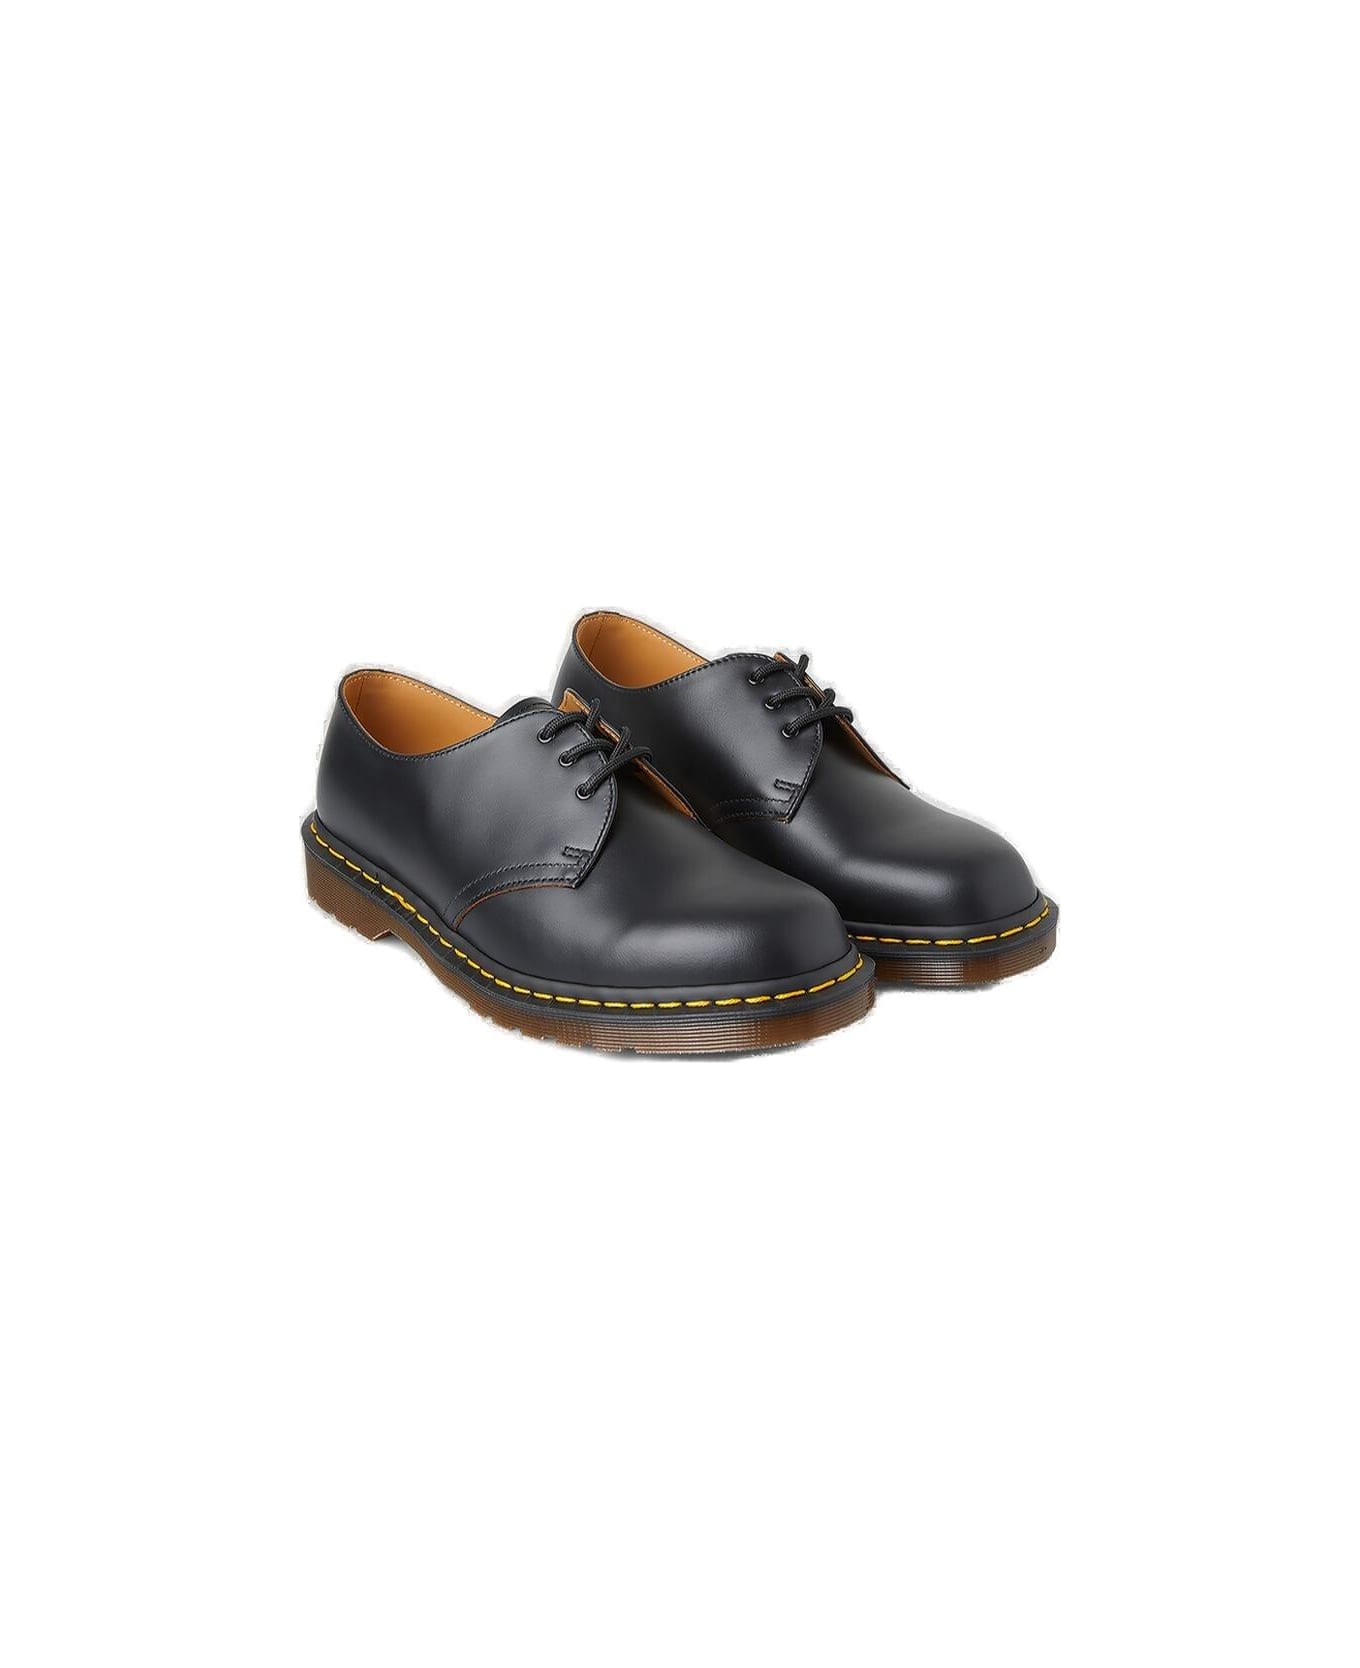 Dr. Martens Vintage 1461 Lace-up Shoes - BLACK フラットシューズ